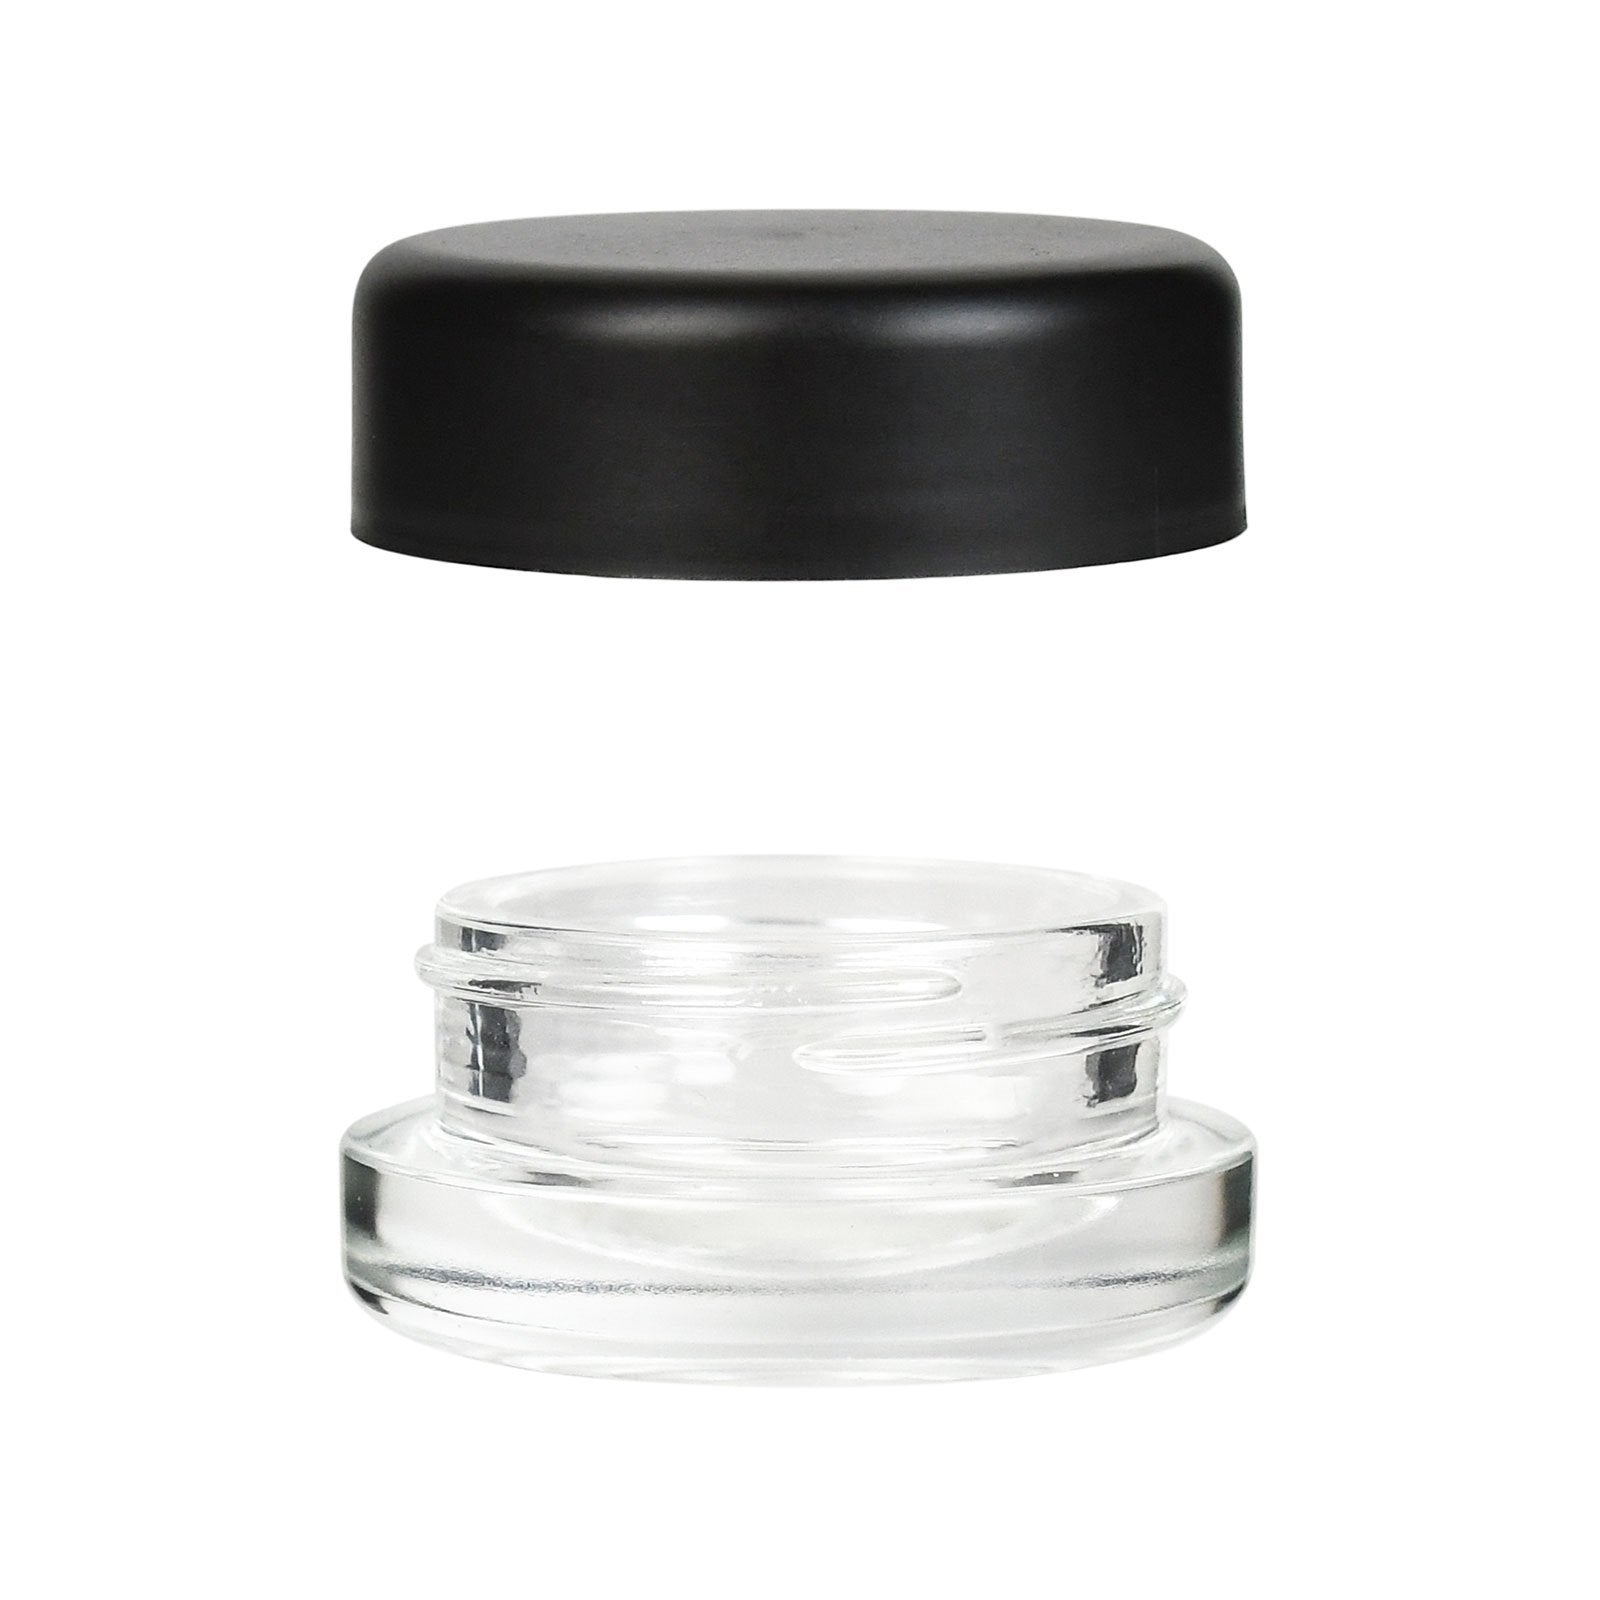 9ml glass jar child resistant black caps - 320 COUNT Flower Power Packages 